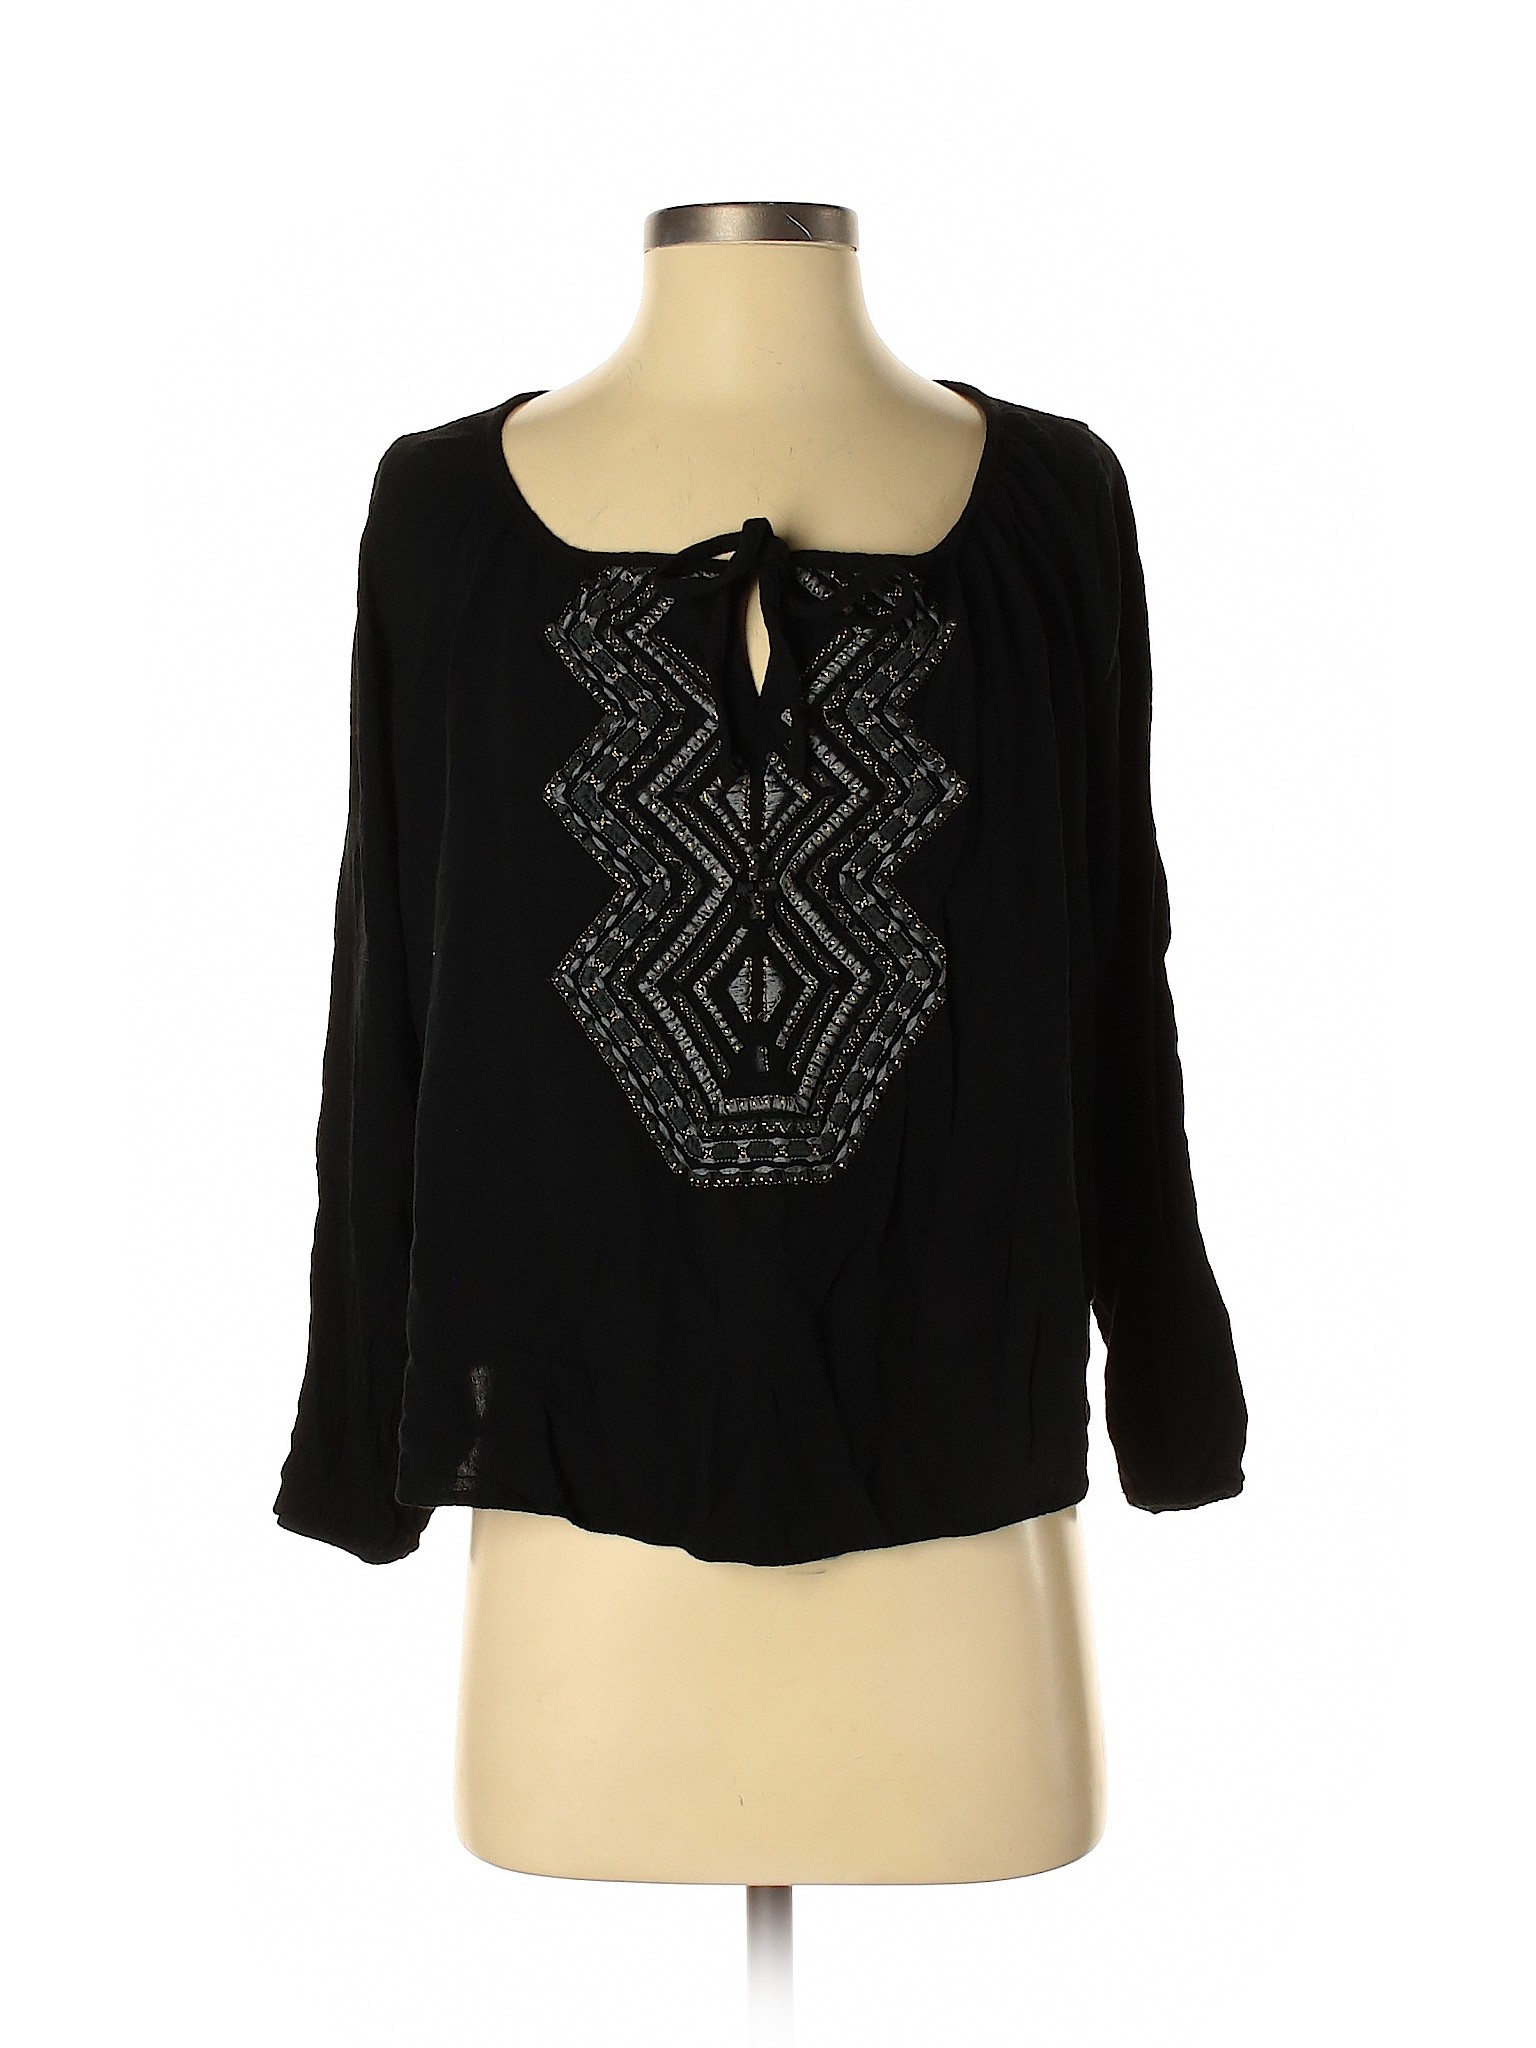 Mossimo Supply Co. Women Black Long Sleeve Blouse XS | eBay